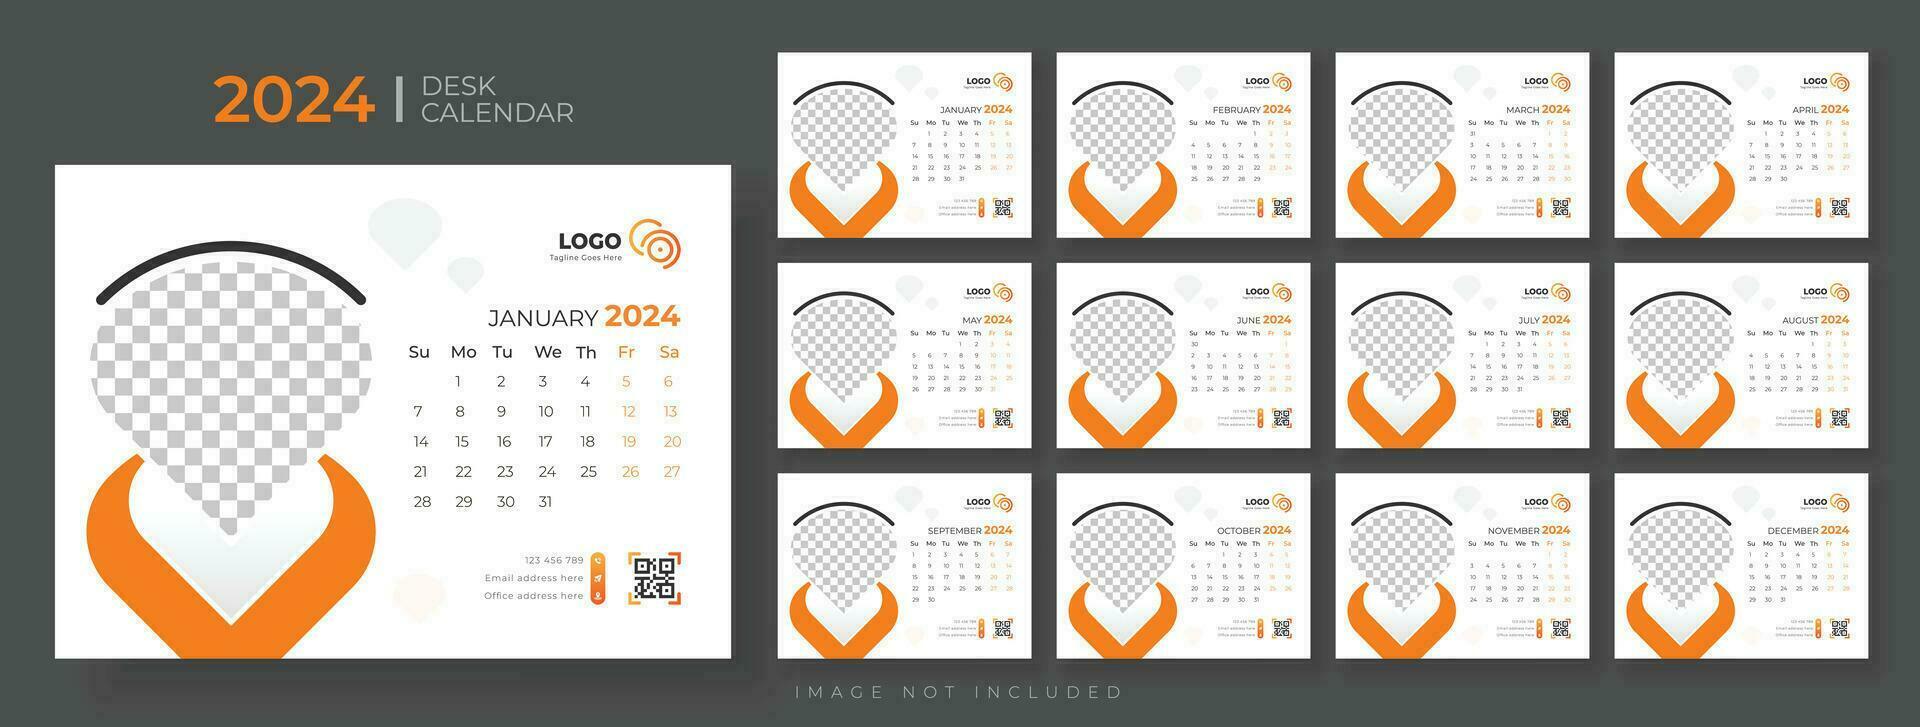 Modern Desk Calendar 2024, Office Calendar 2024,Week Starts on sunday, template for annual calendar 2024. vector